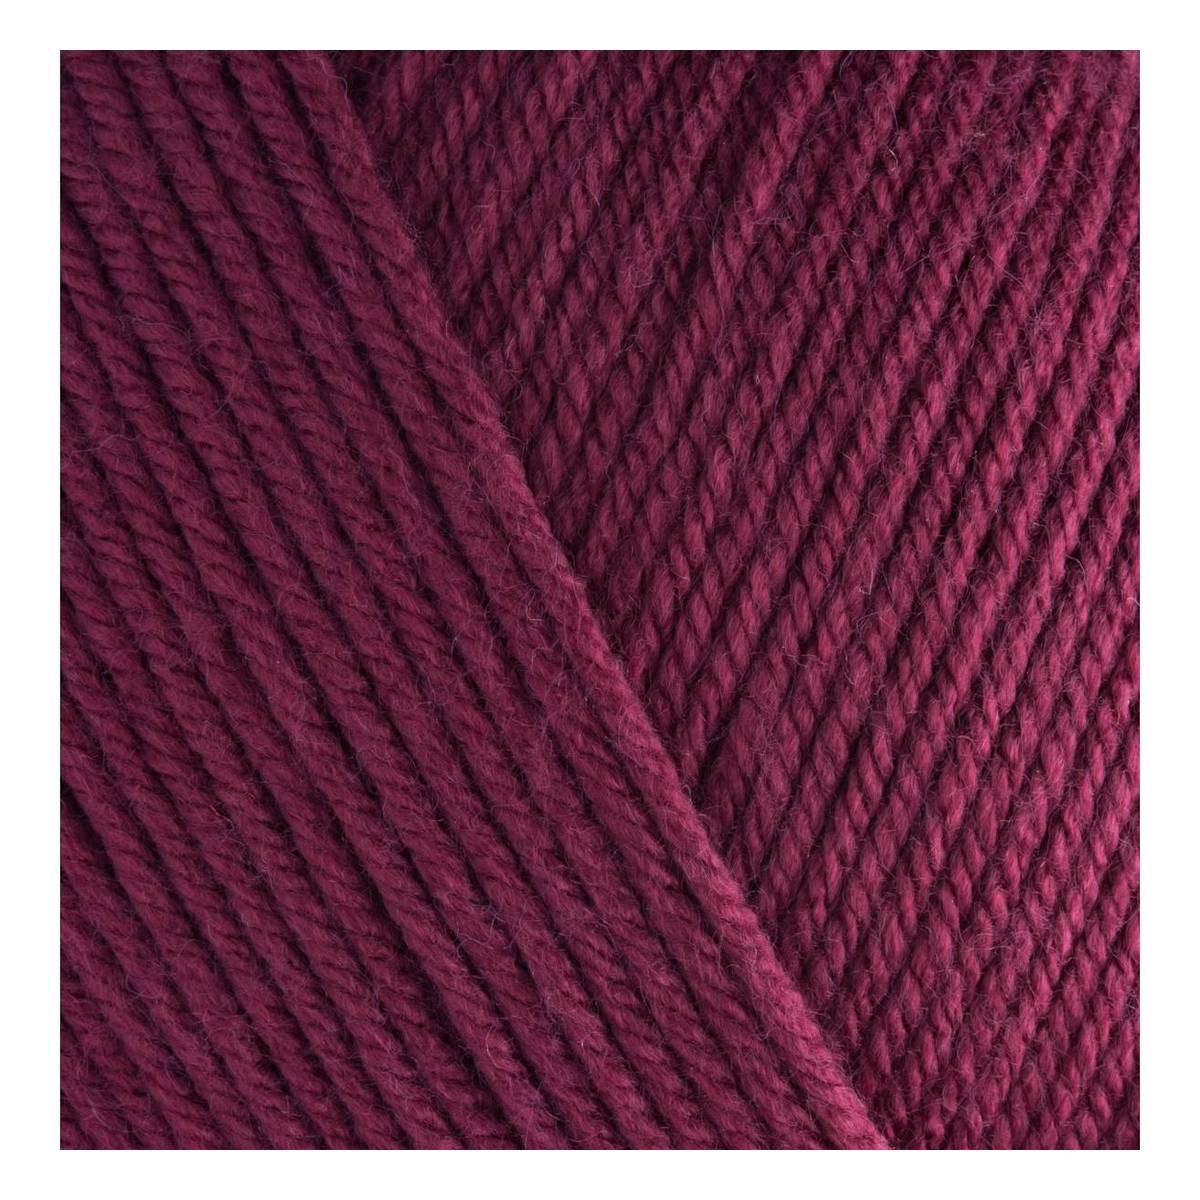 Women's Institute Plum Soft and Smooth Aran Yarn 400g